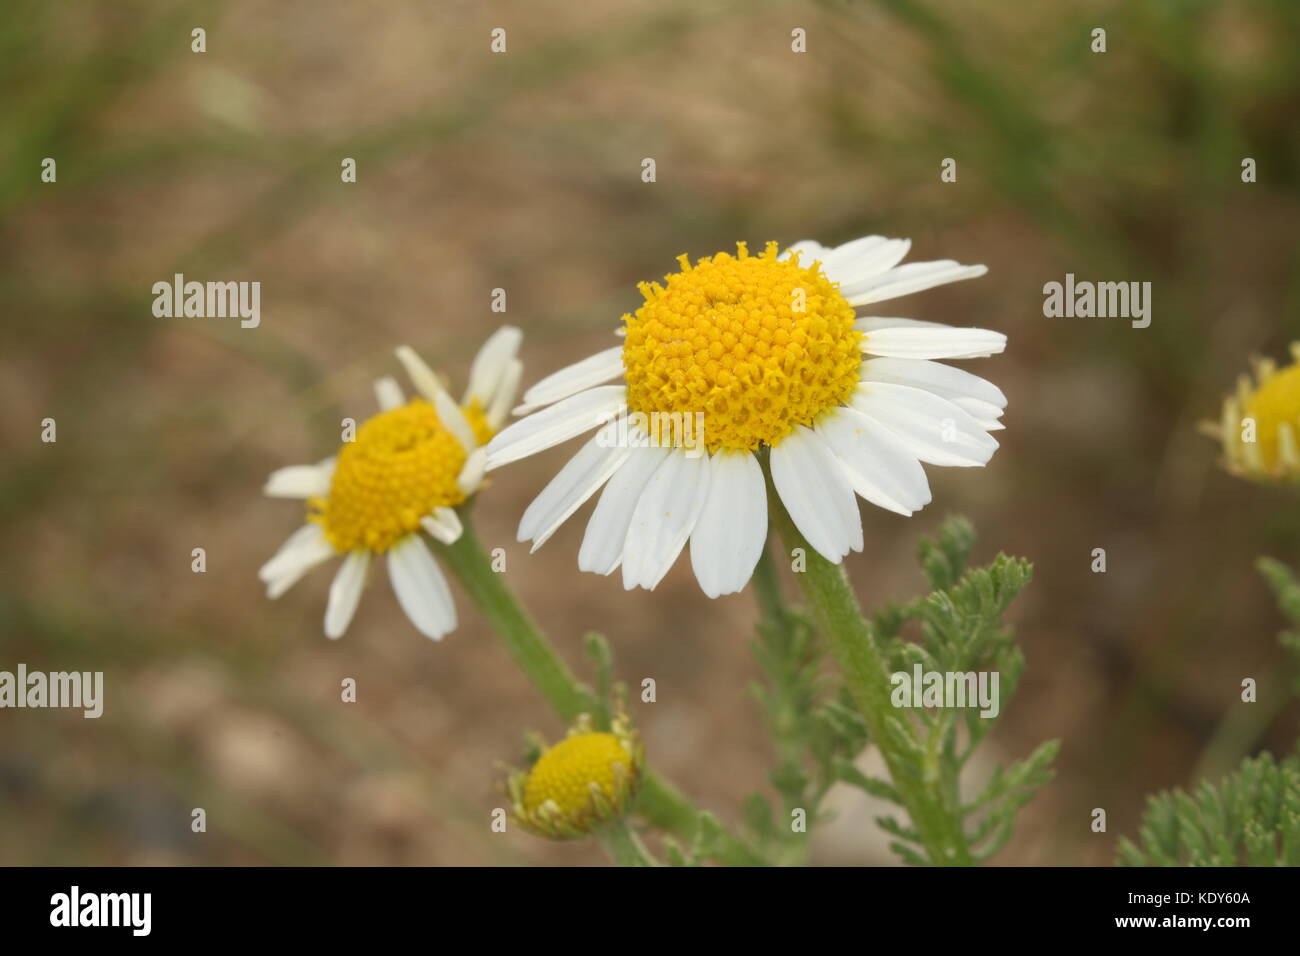 Chrysanthemum / pimpernels / daisies Stock Photo